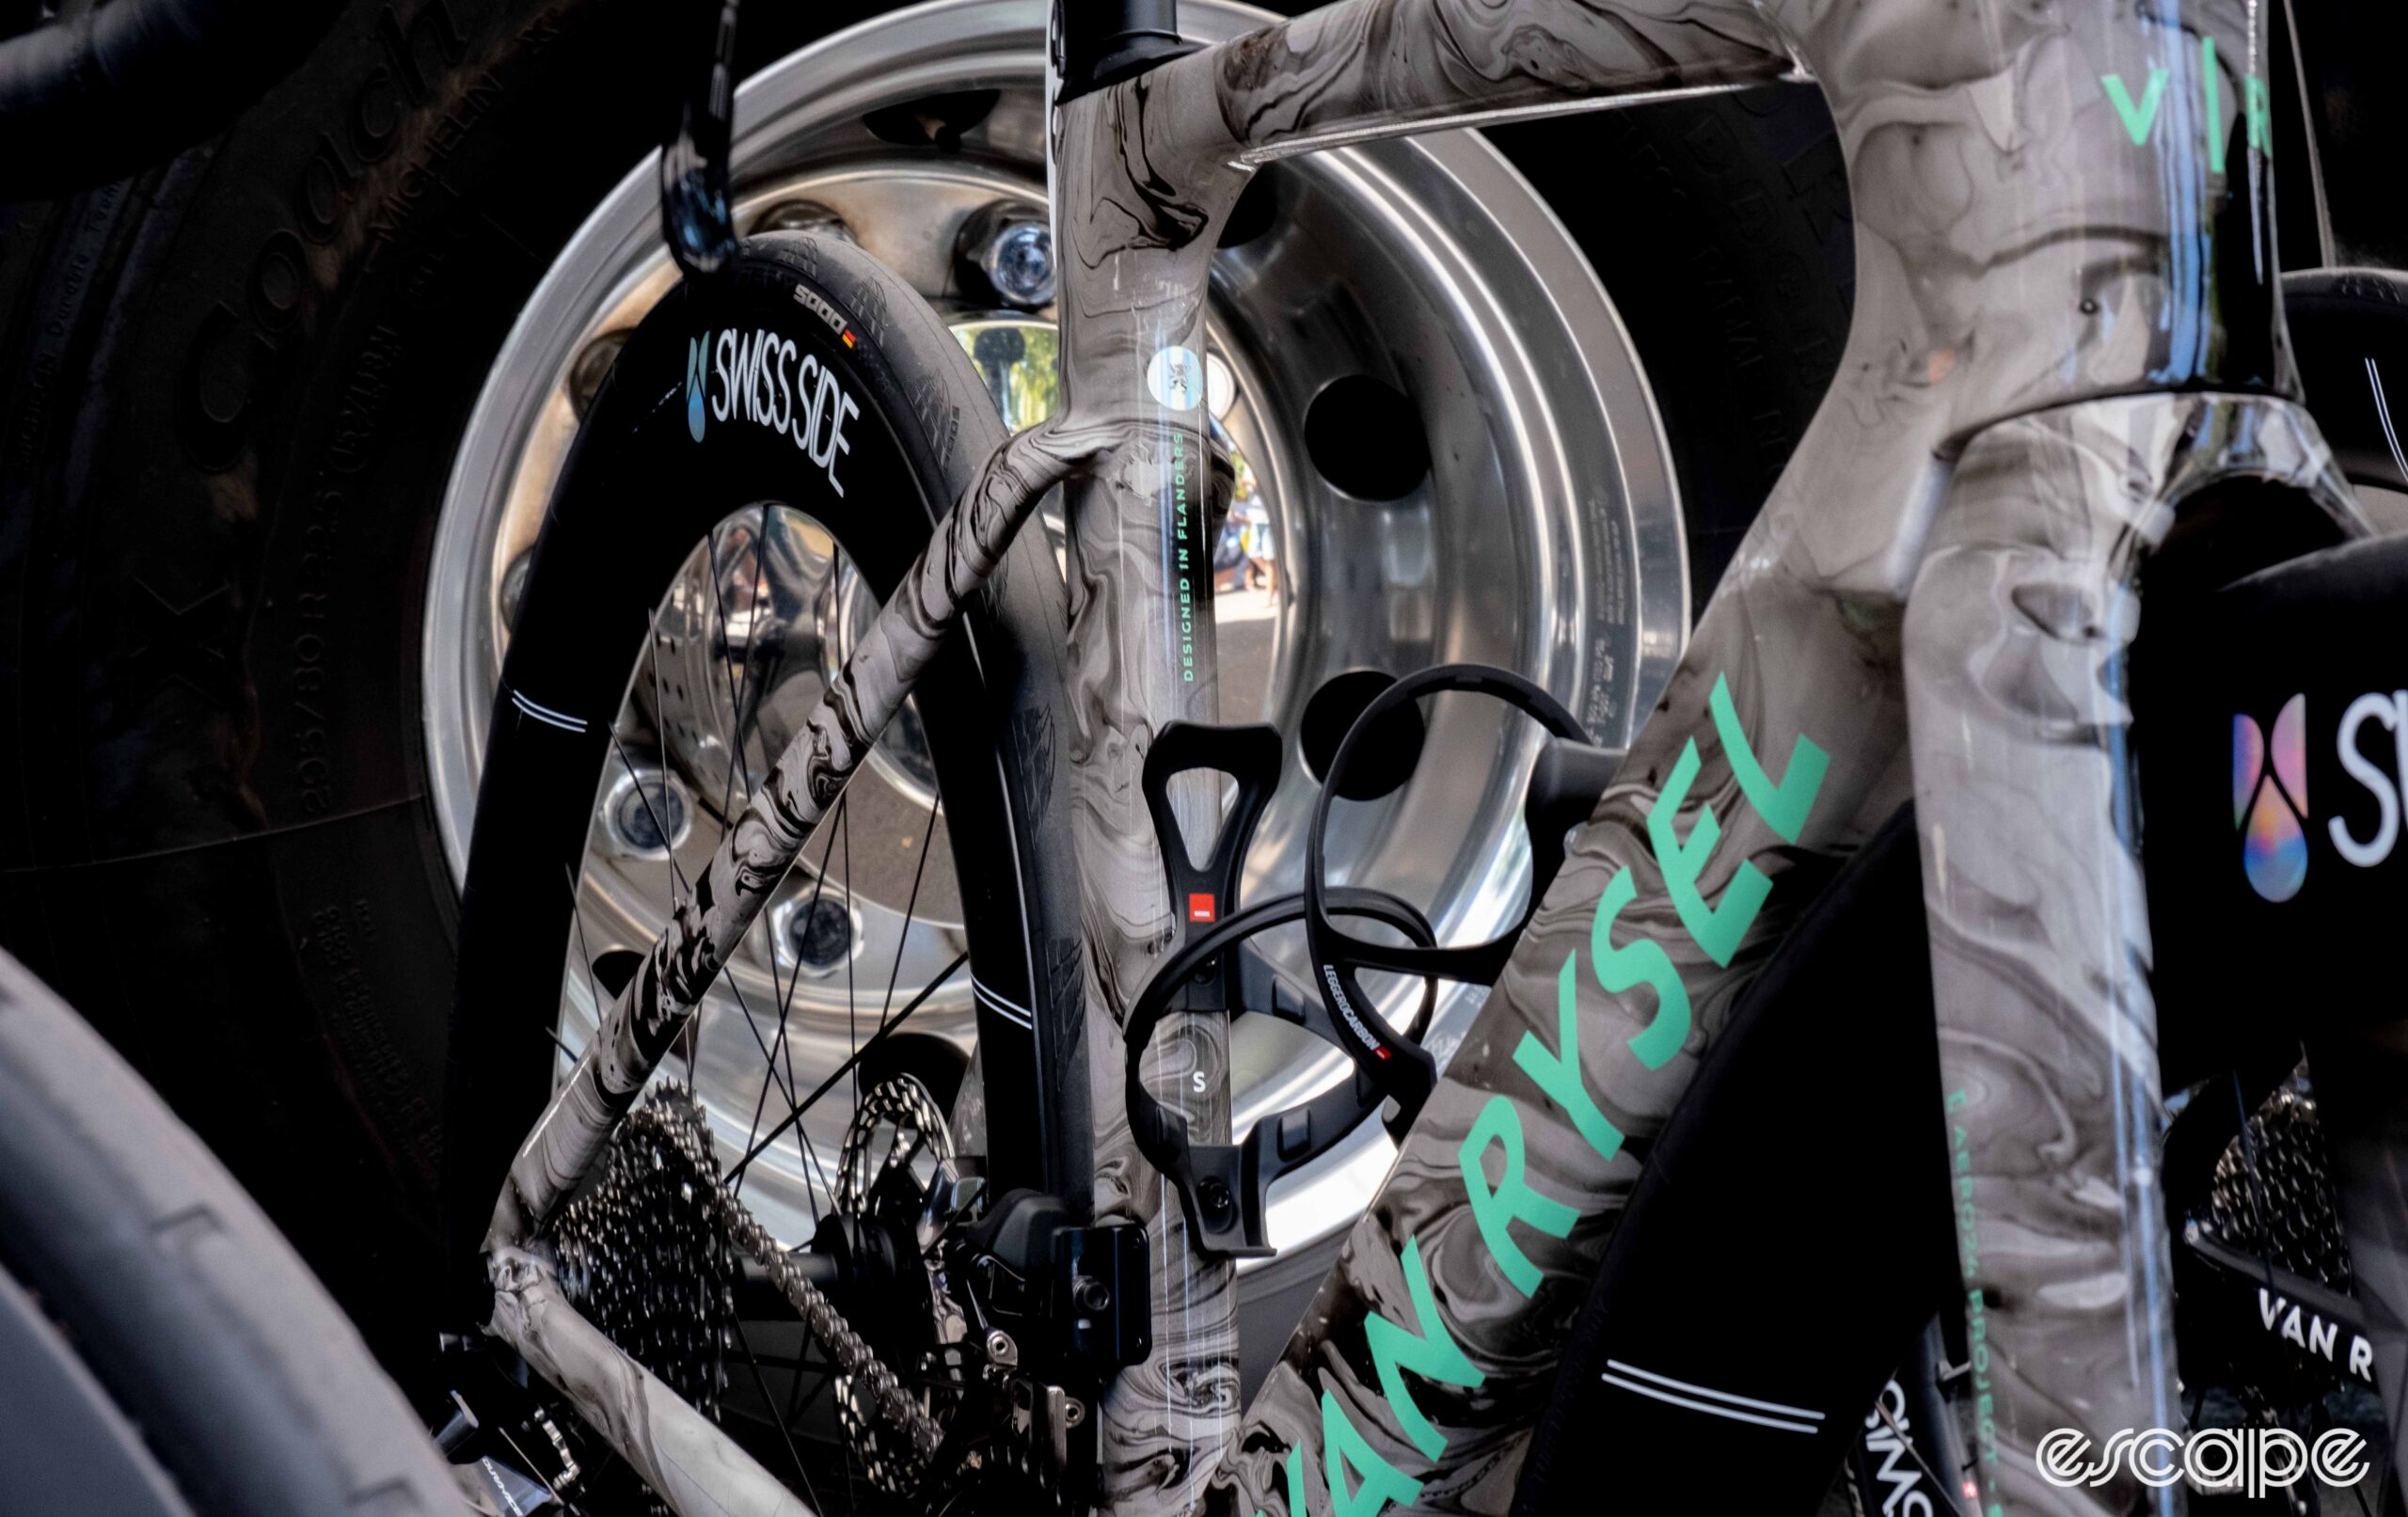 The photo shows Van Rysel's new FCR Pro aero bike seat tube